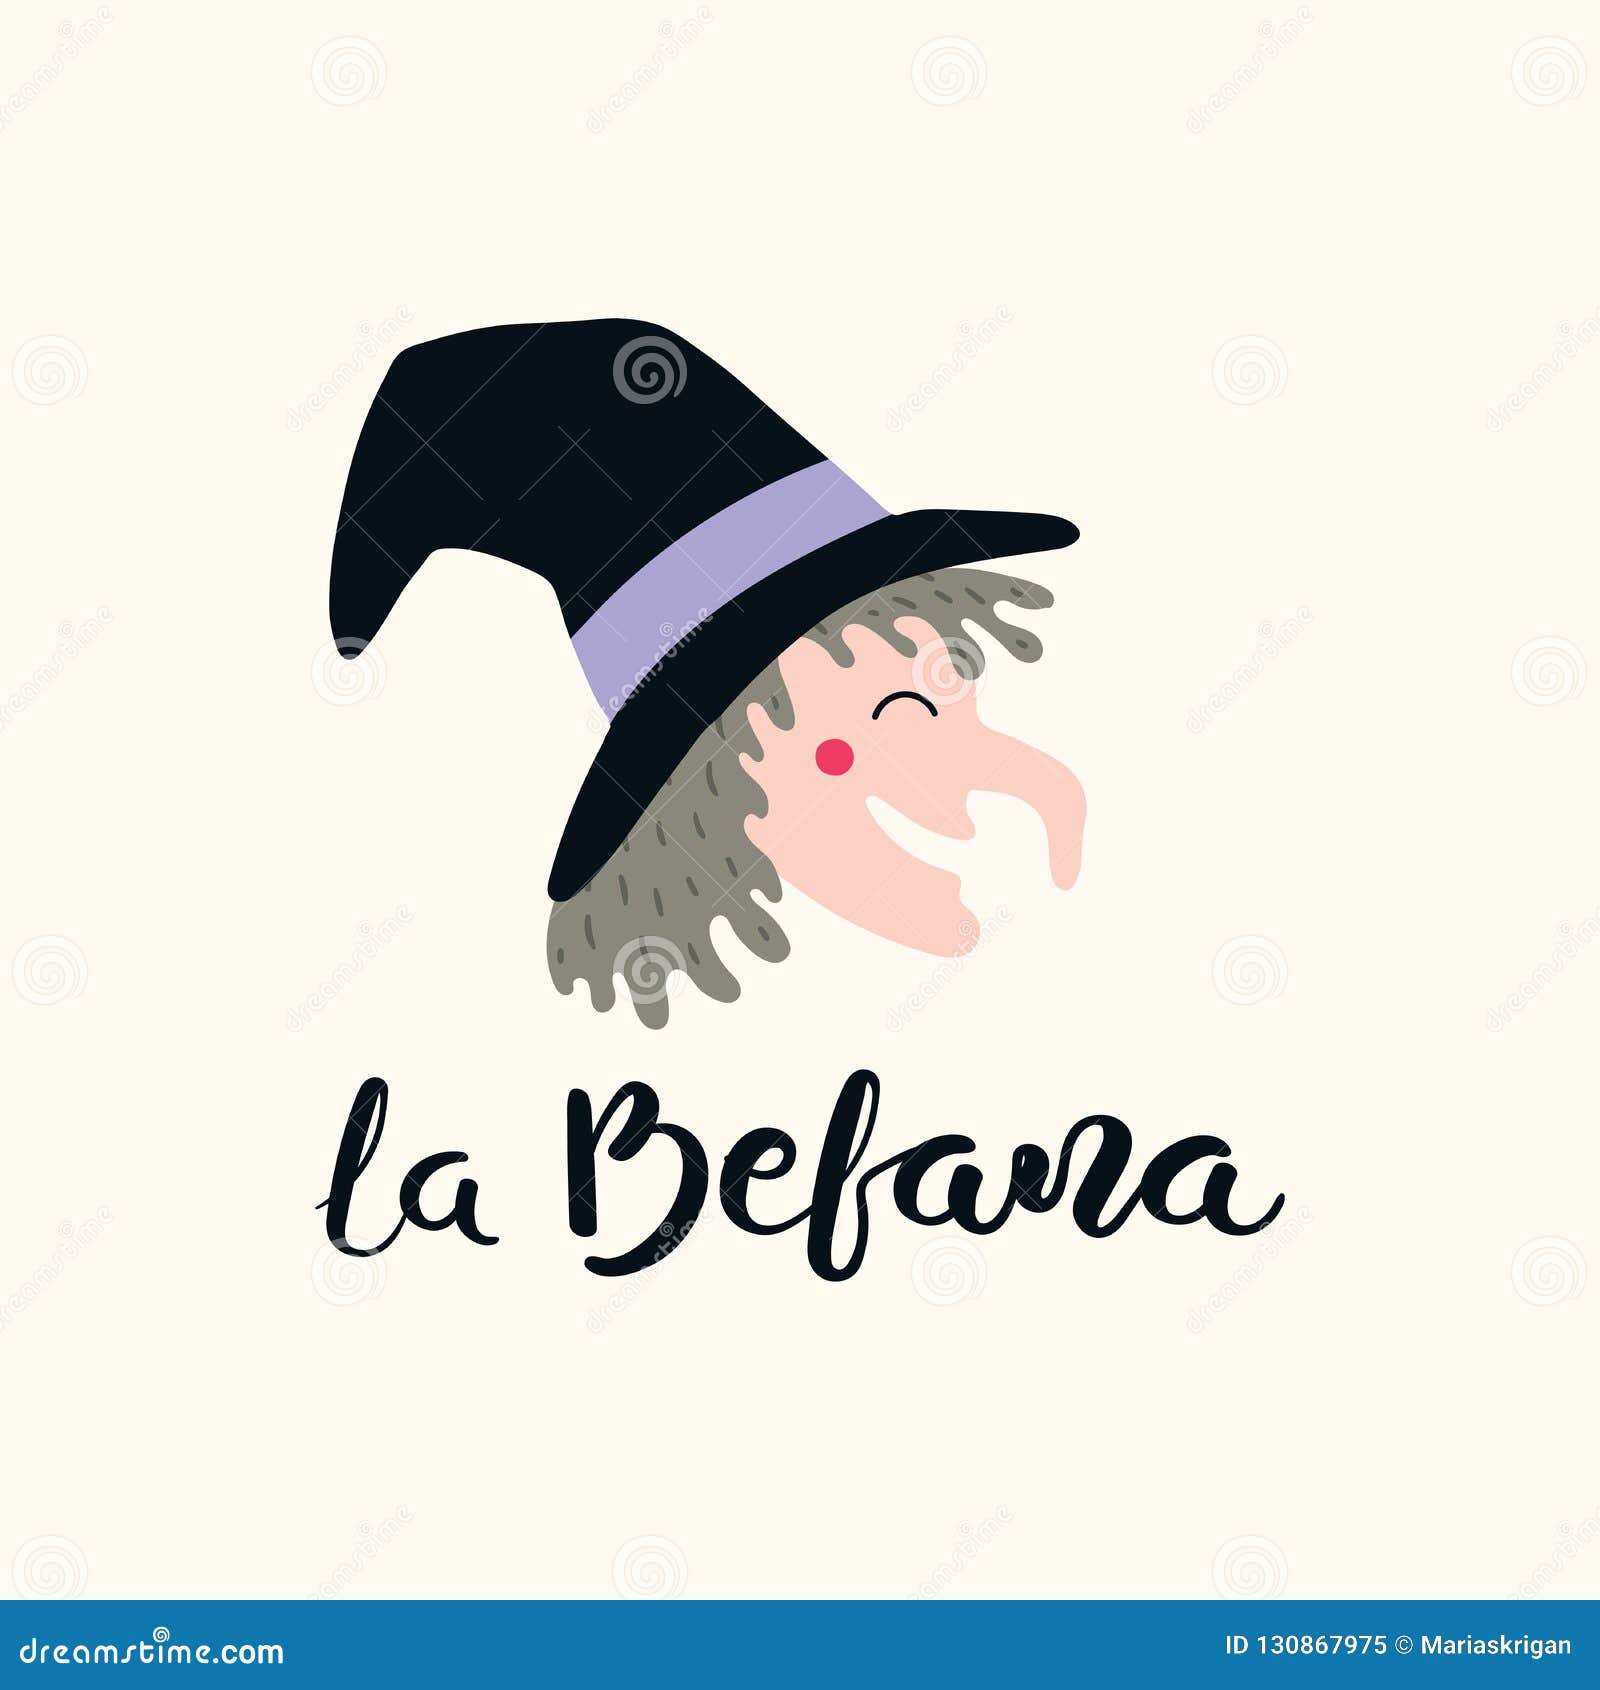 La Befana is Coming